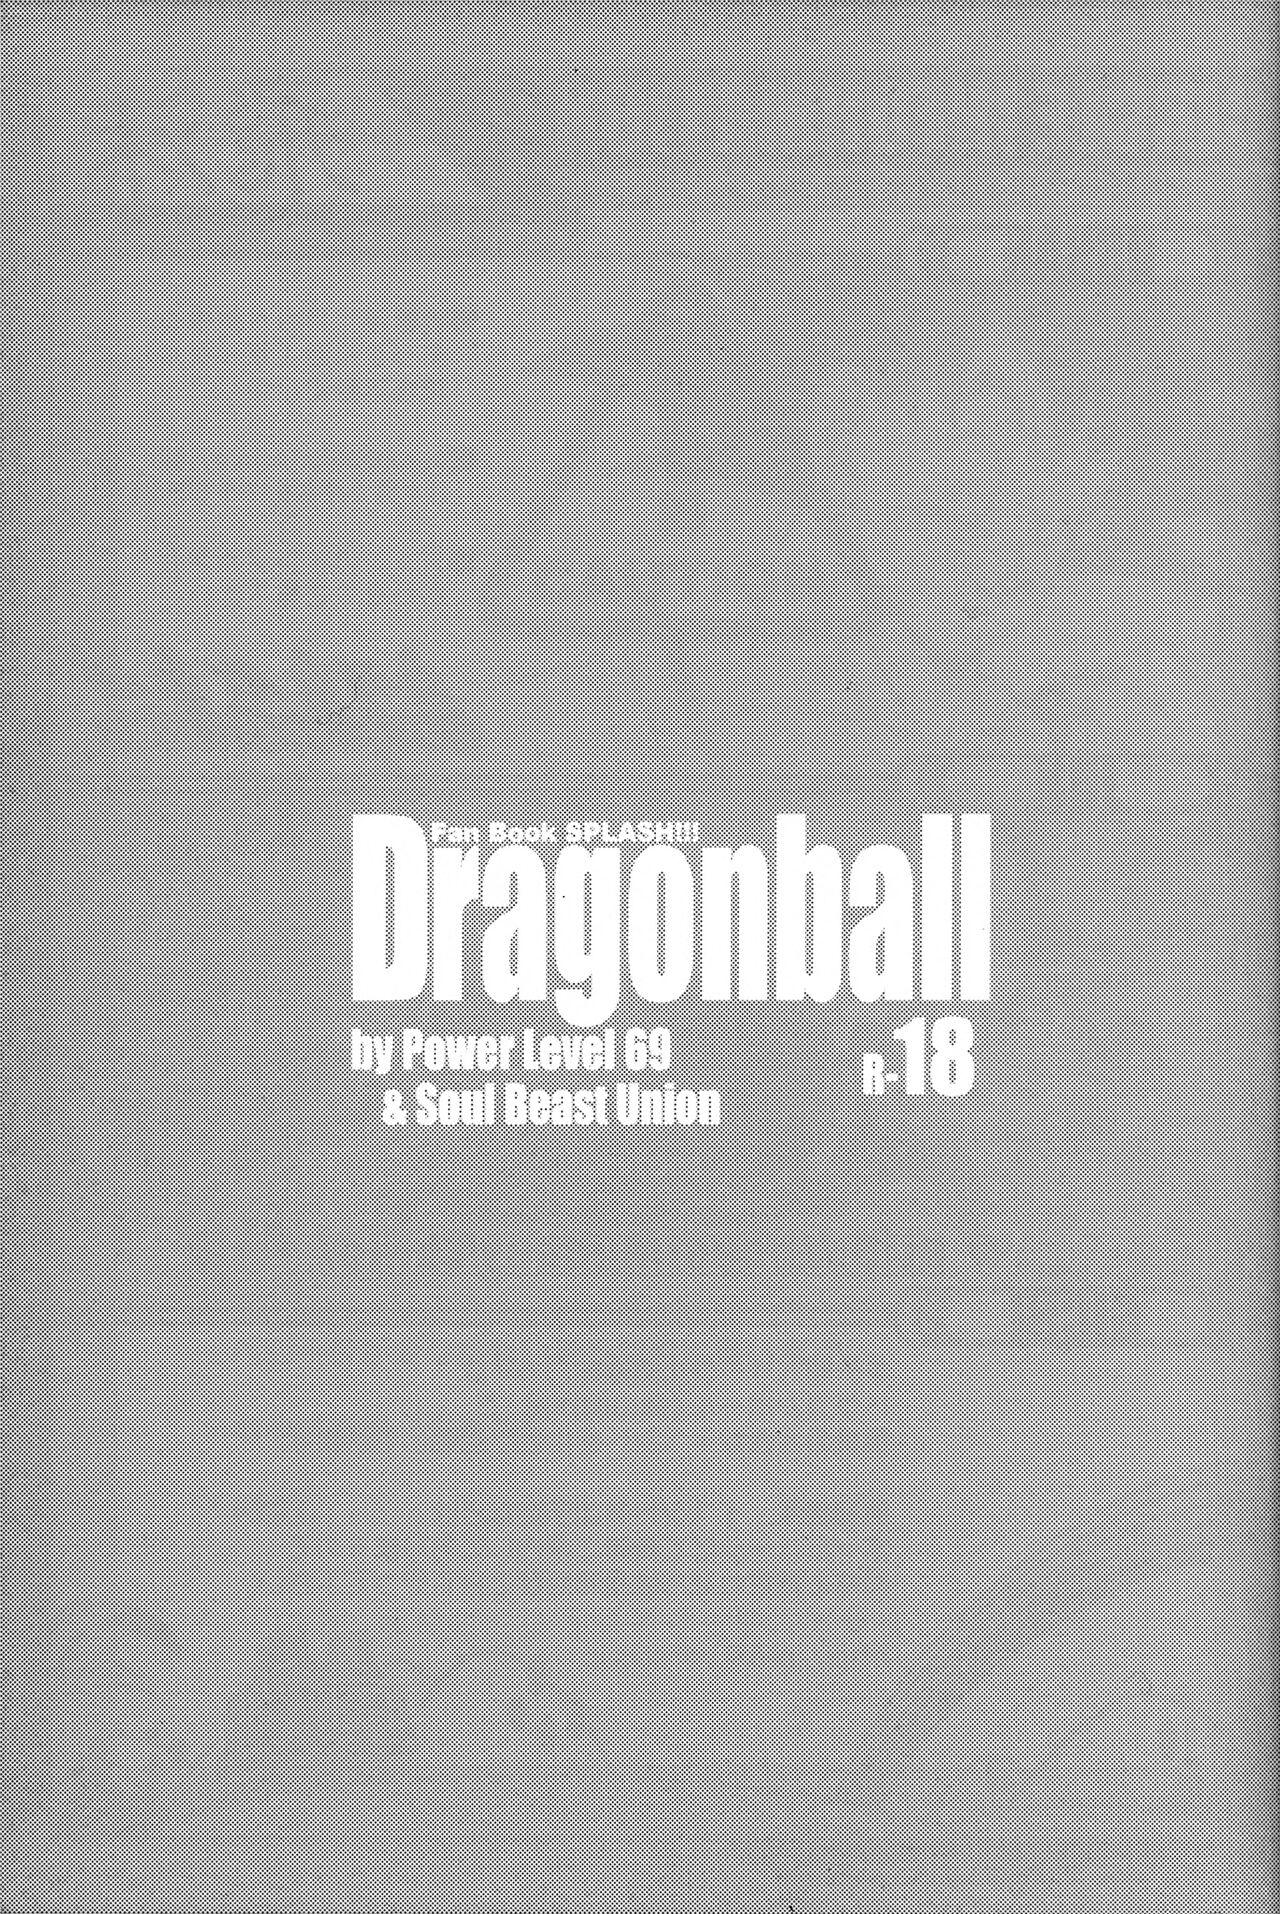 Dragonball Fan Book SPLASH!!! 3